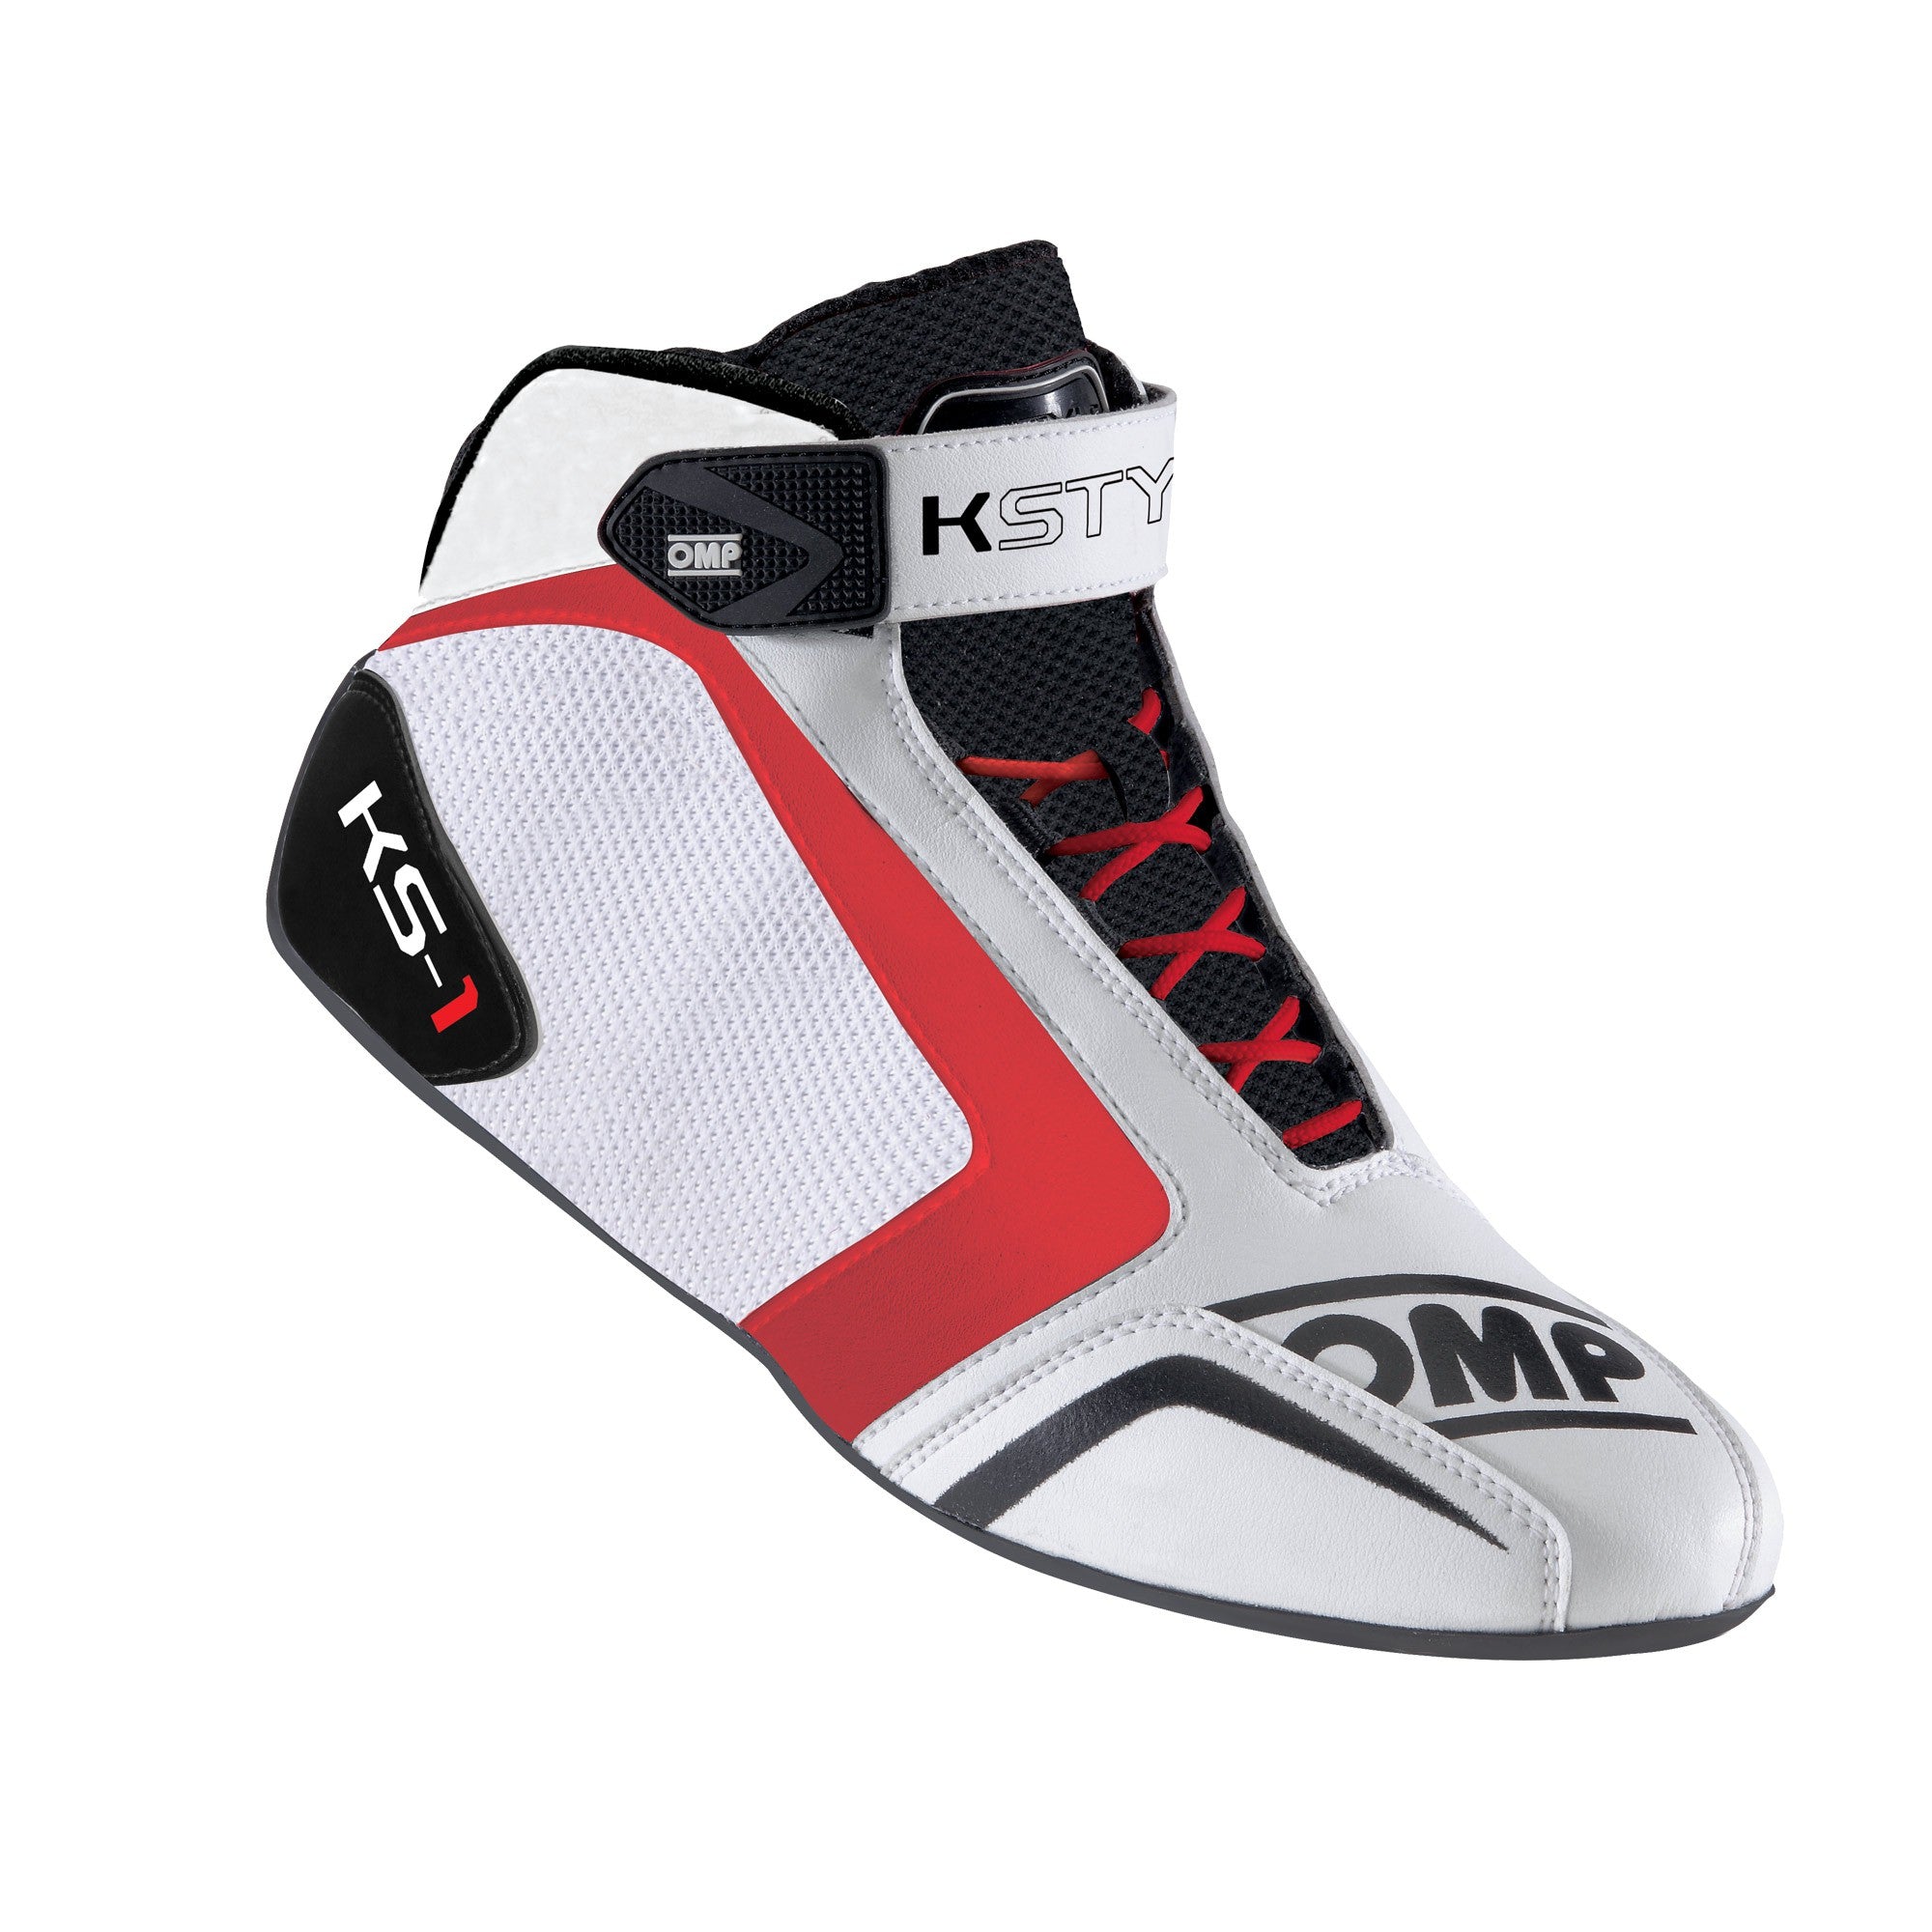 OMP KC0-0815-A01-120-41 (IC/81512041) Kart shoes KS-1, white/black/red, size 41 Photo-0 